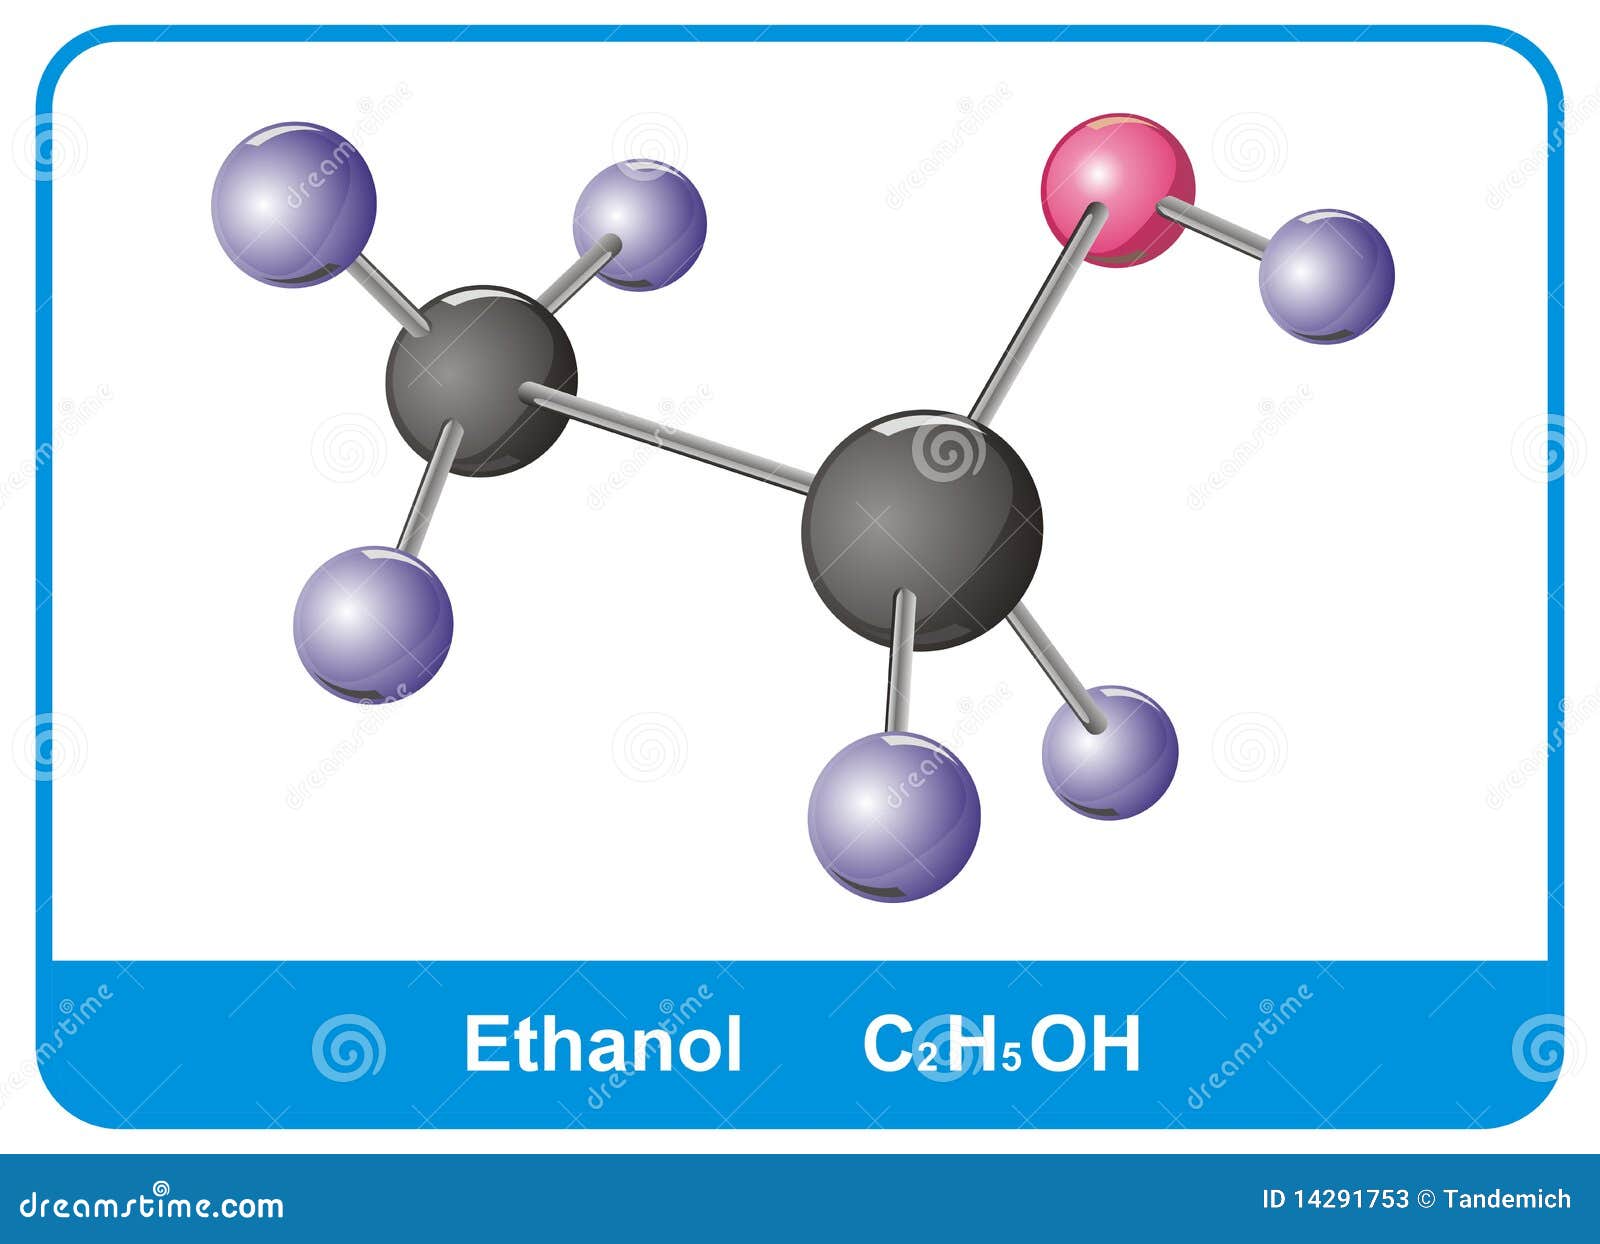 B c2h5oh. Молекула спирта c2h5oh. Этанол молекула c5h5oh. Строение молекулы этанола. Модель молекулы этилового спирта.